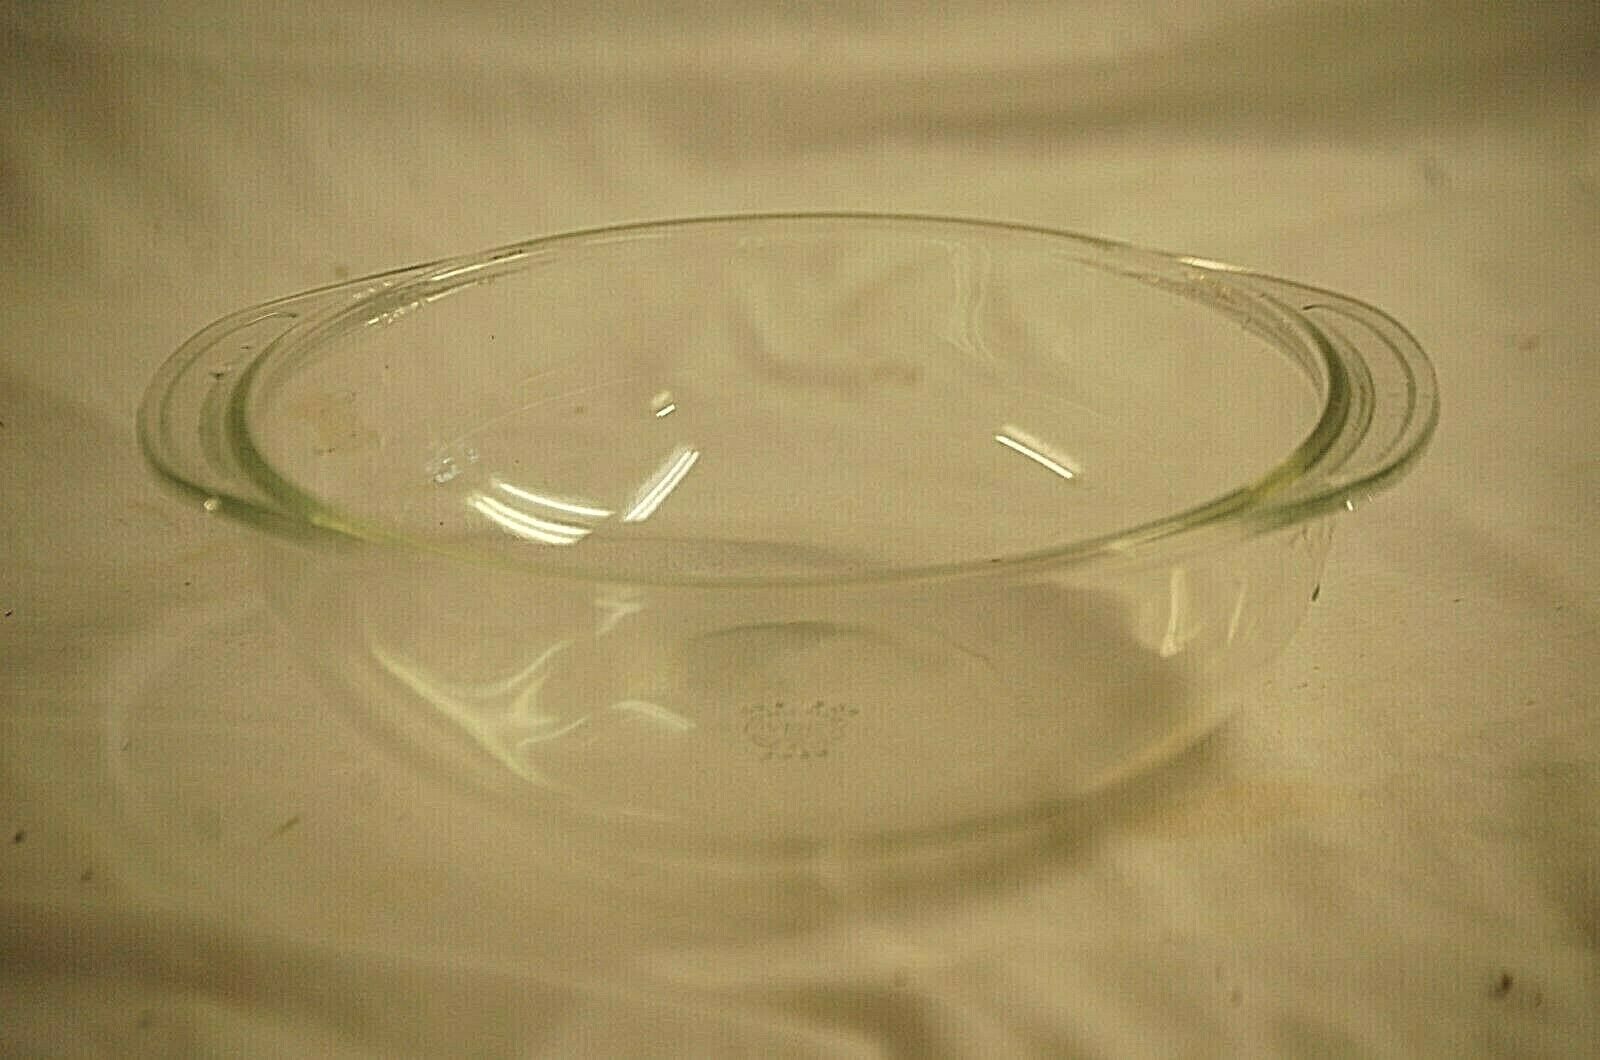 Pyrex 024 2 Liter Clear Glass Mixing Bowl